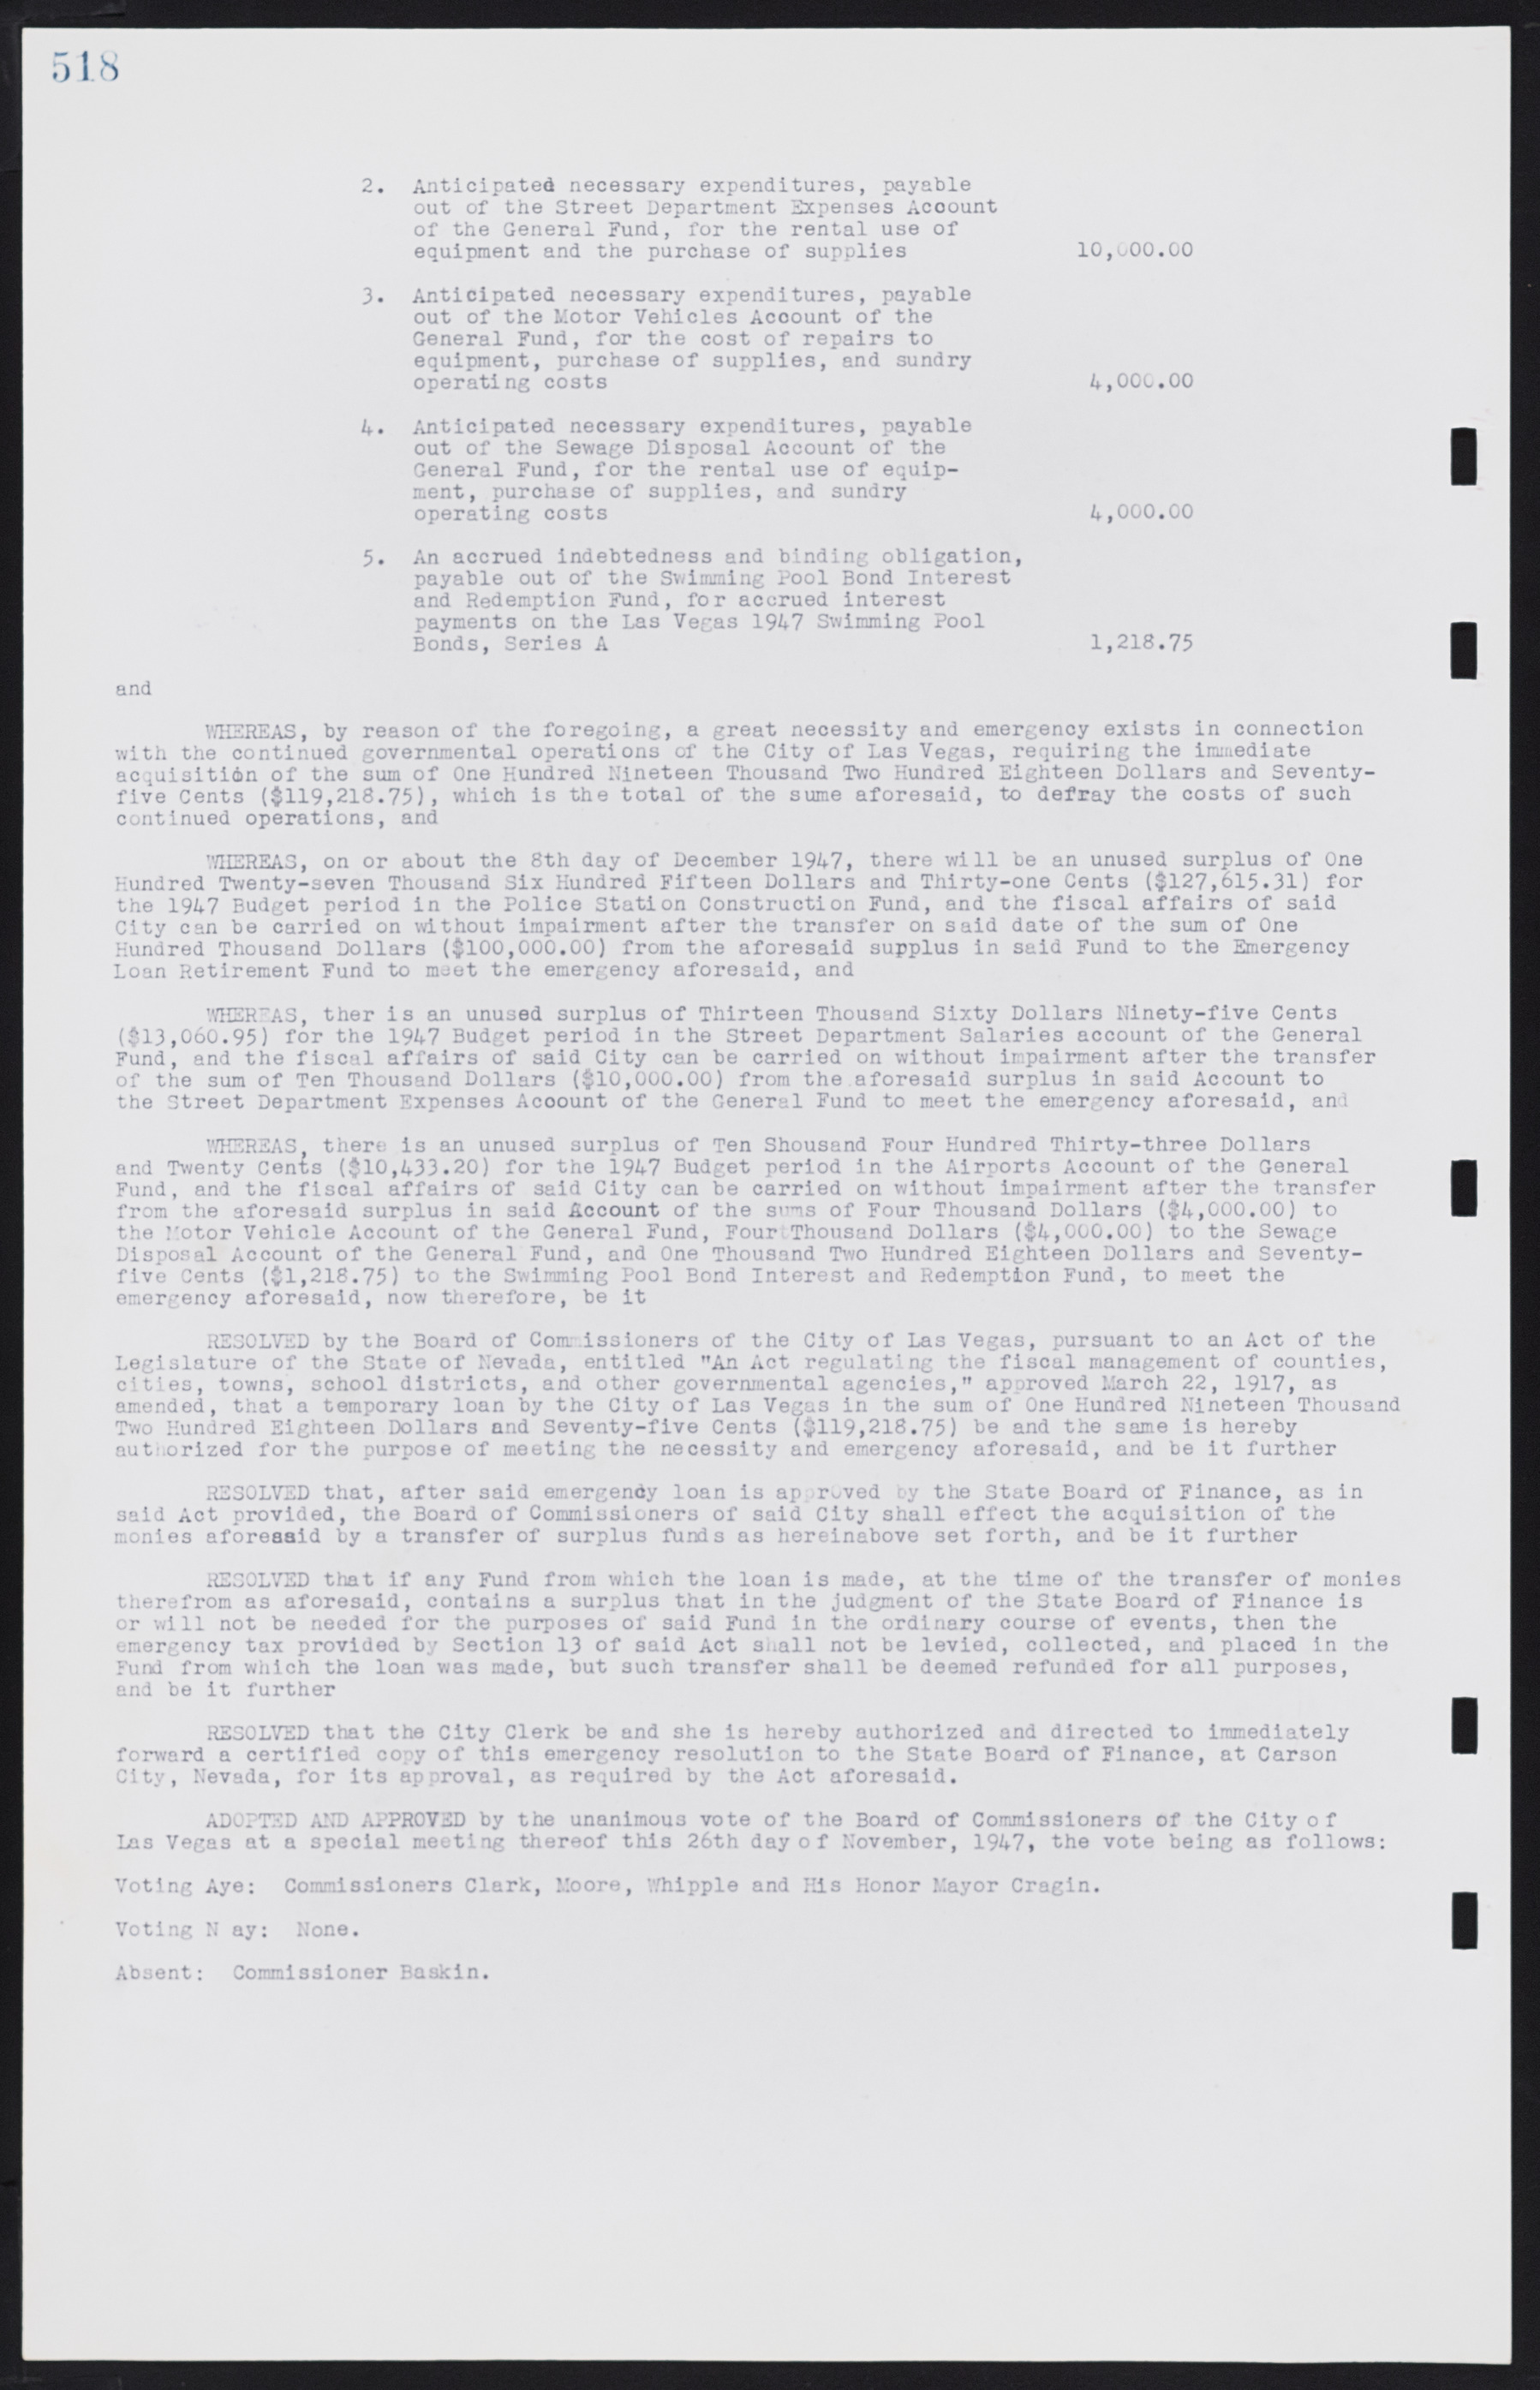 Las Vegas City Commission Minutes, January 7, 1947 to October 26, 1949, lvc000006-548